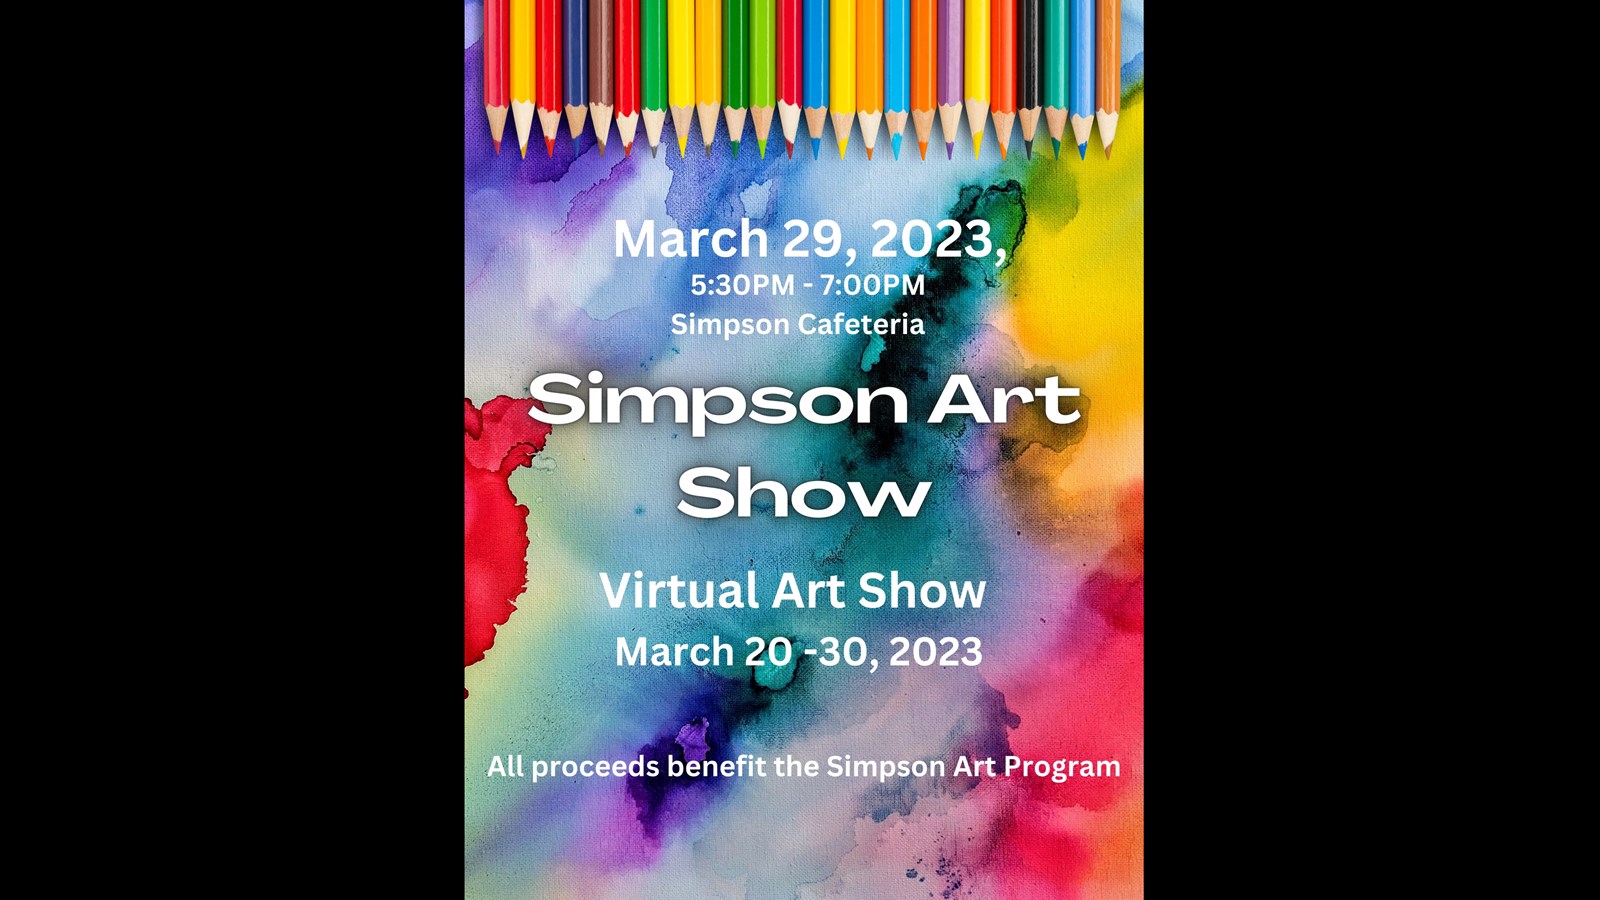 Simpson Art show flyer